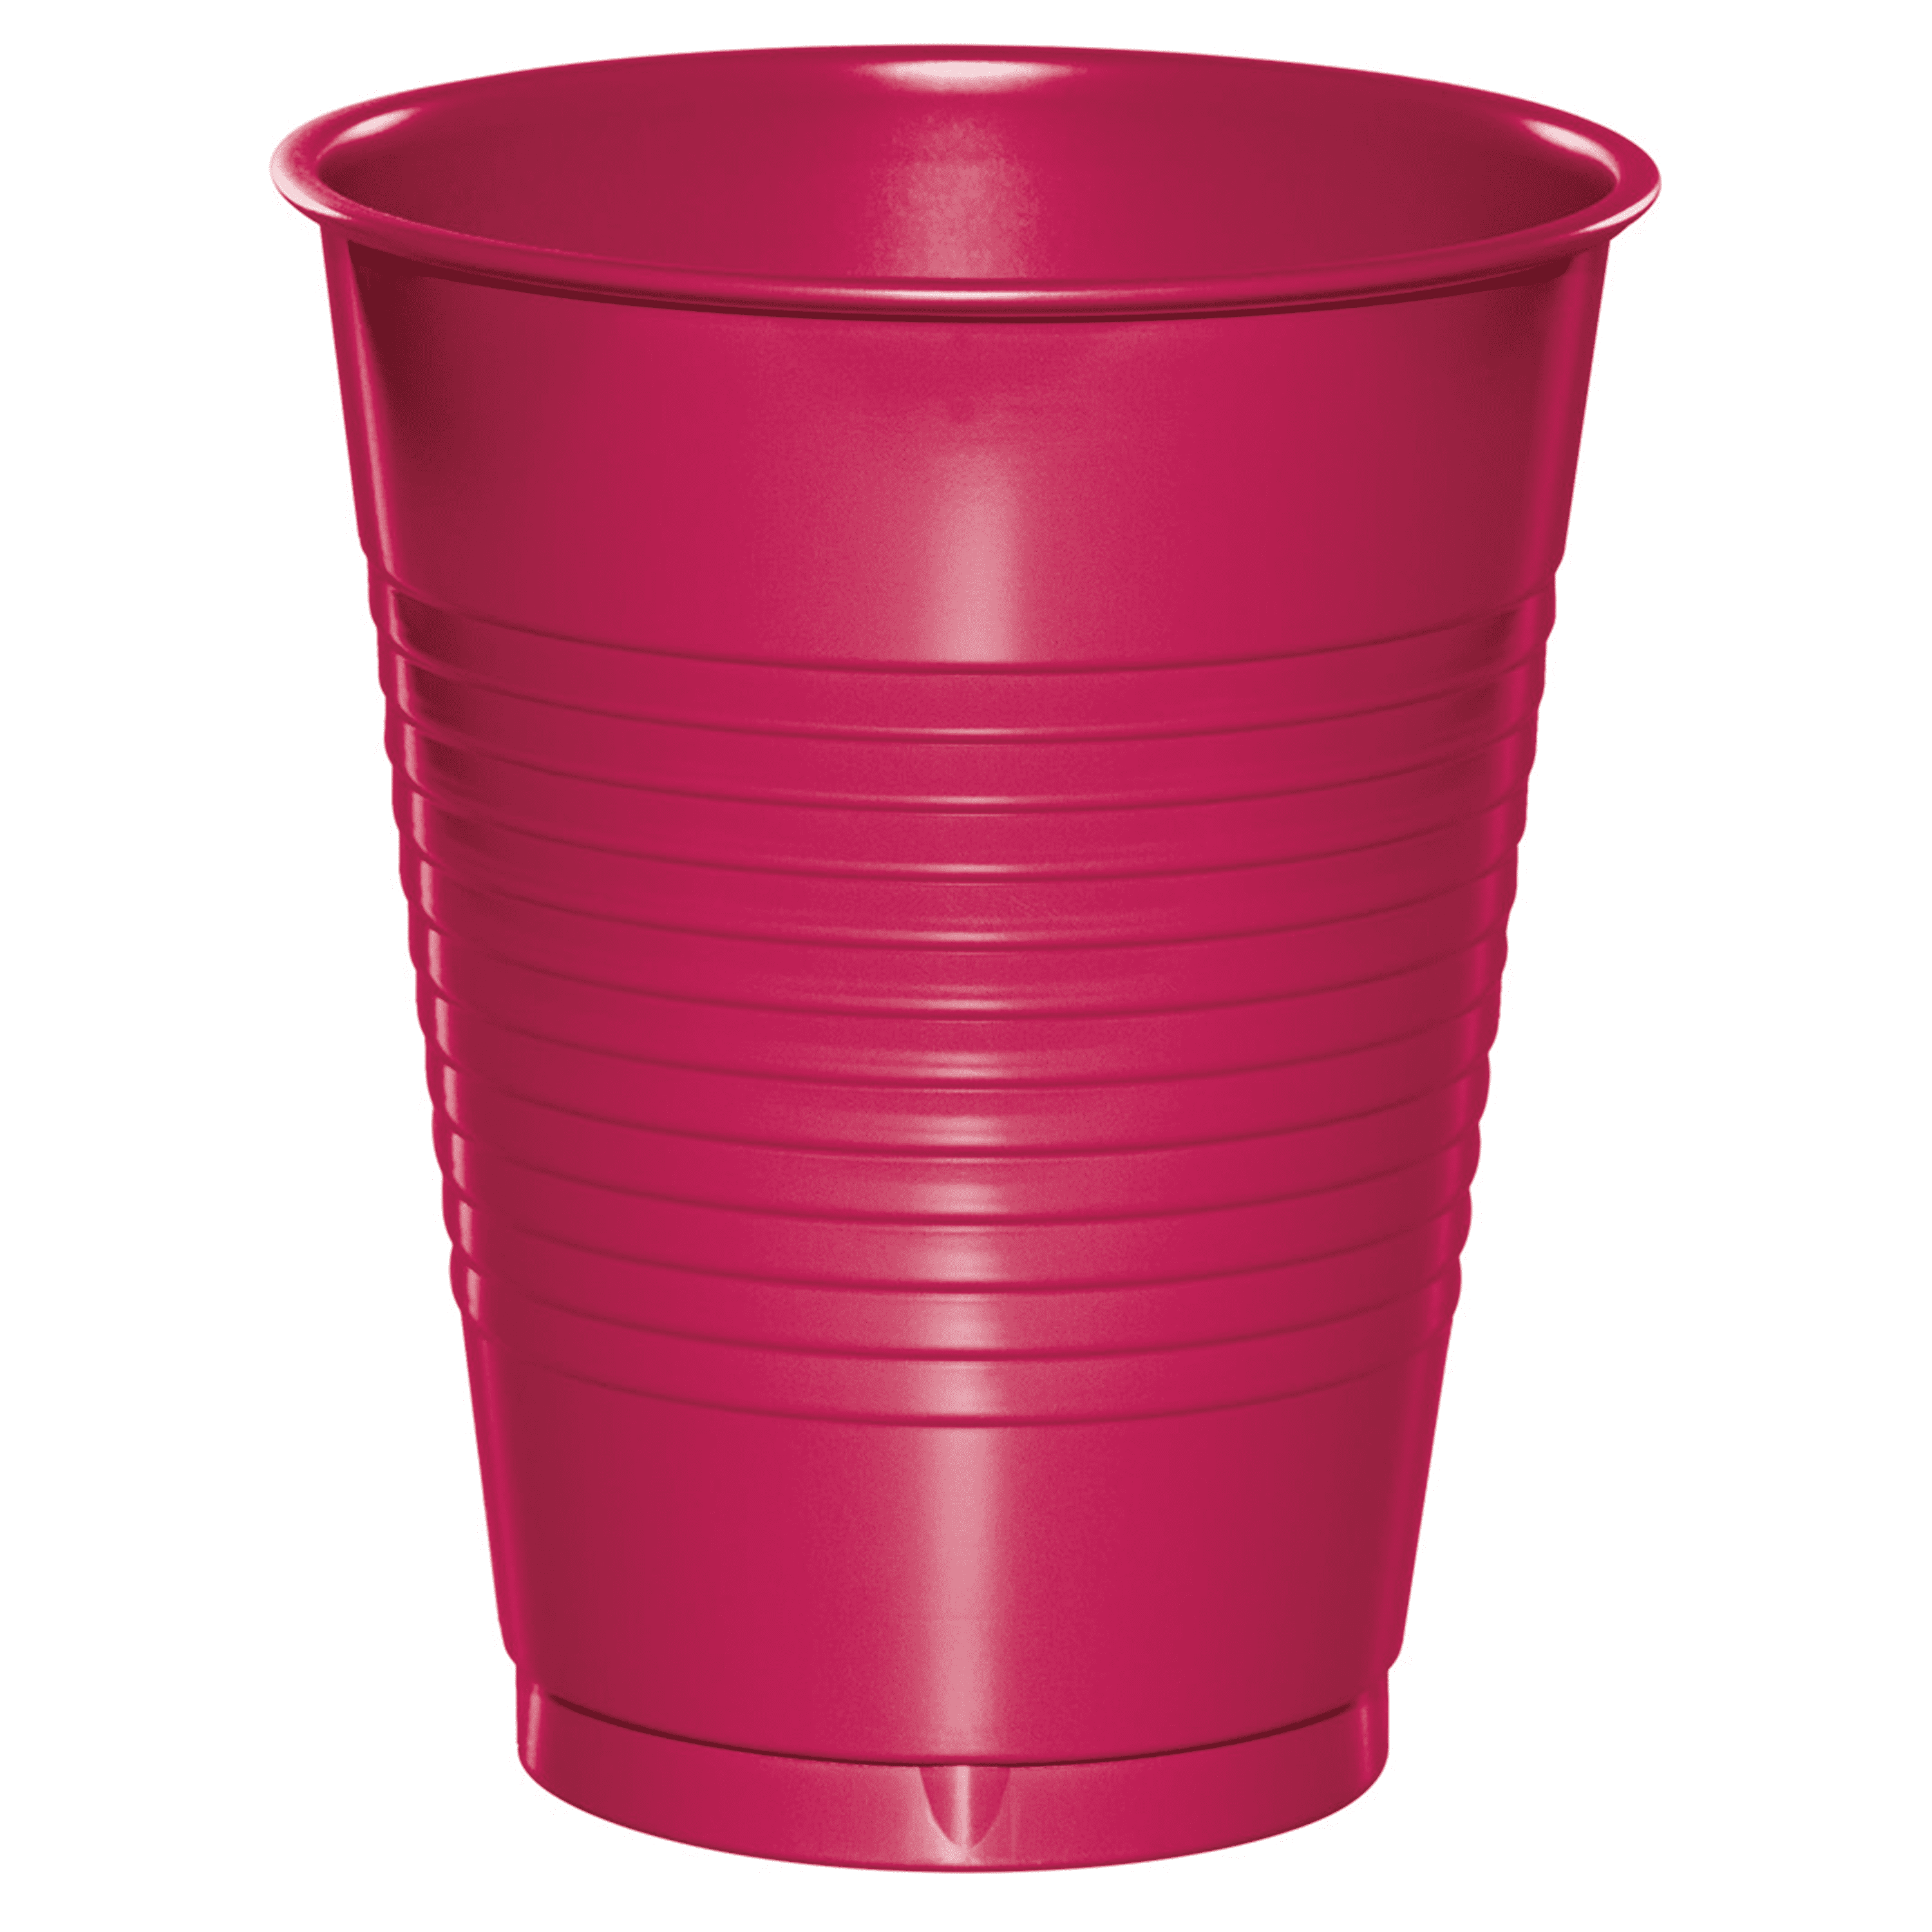 cssopenss 120 pcs 16 oz purple plastic cups 16 oz purple Duty Drinking cups  purple plastic Disposabl…See more cssopenss 120 pcs 16 oz purple plastic